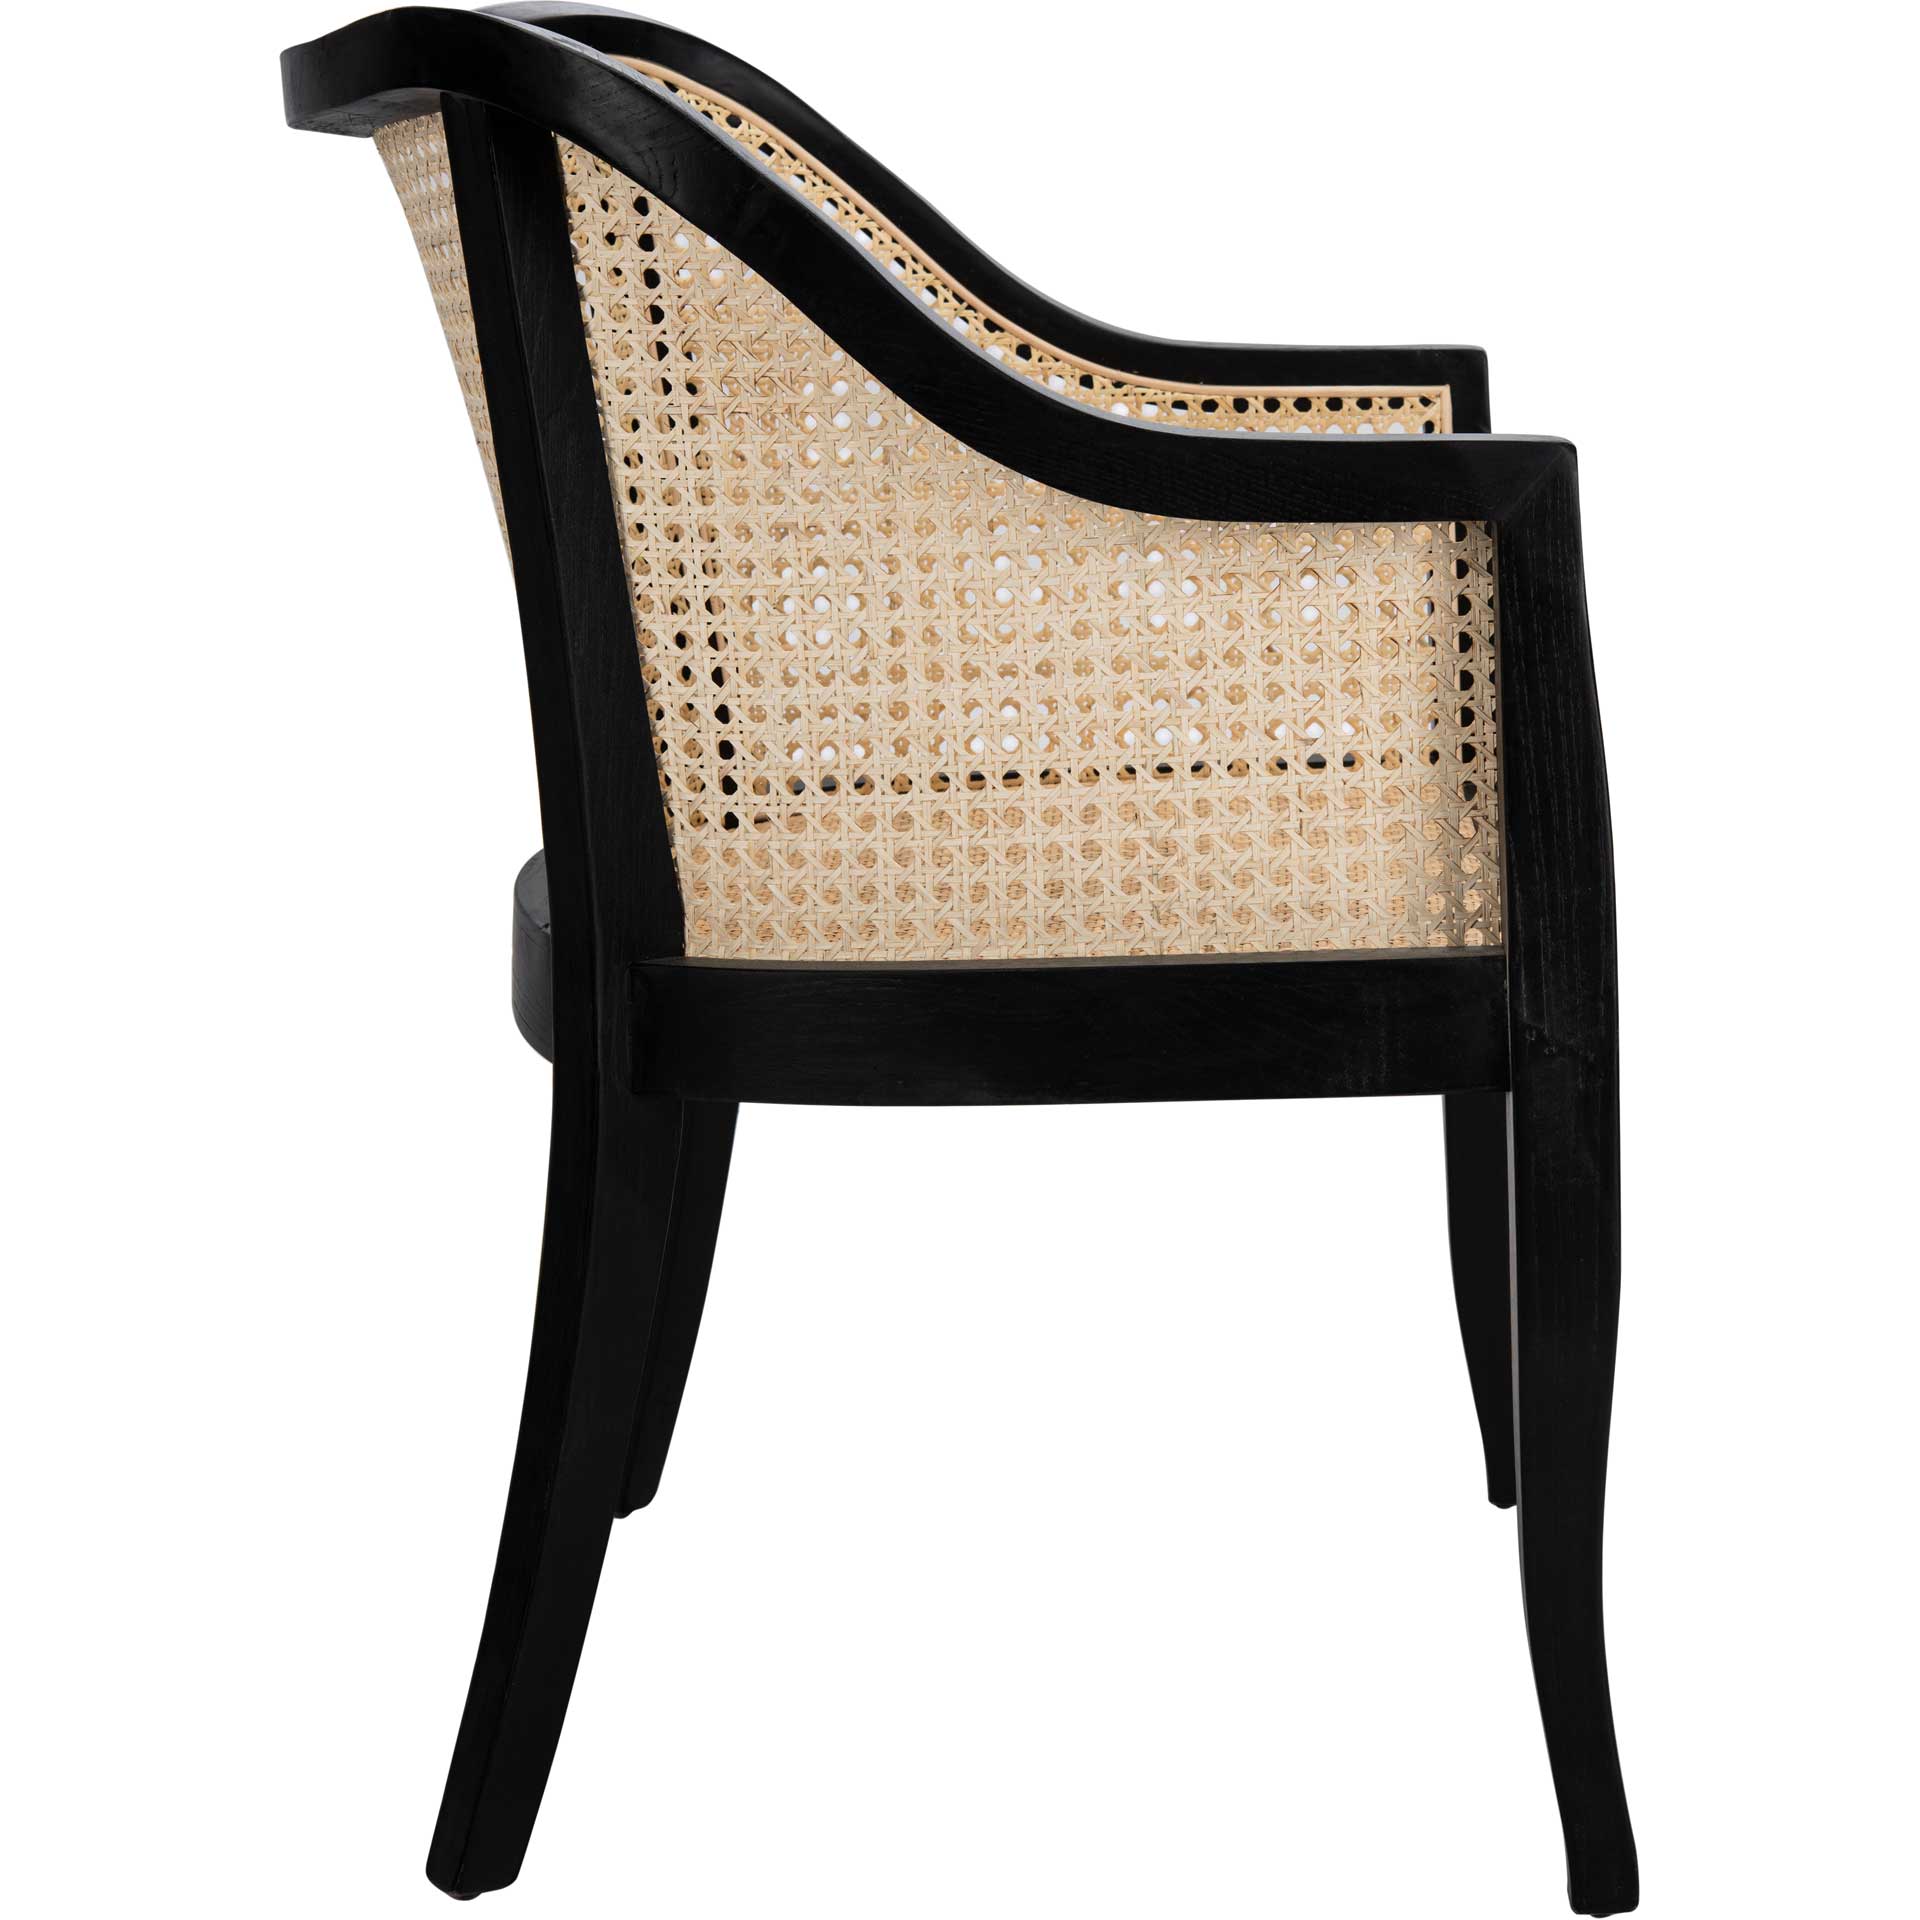 Maddox Dining Chair Black/Natural